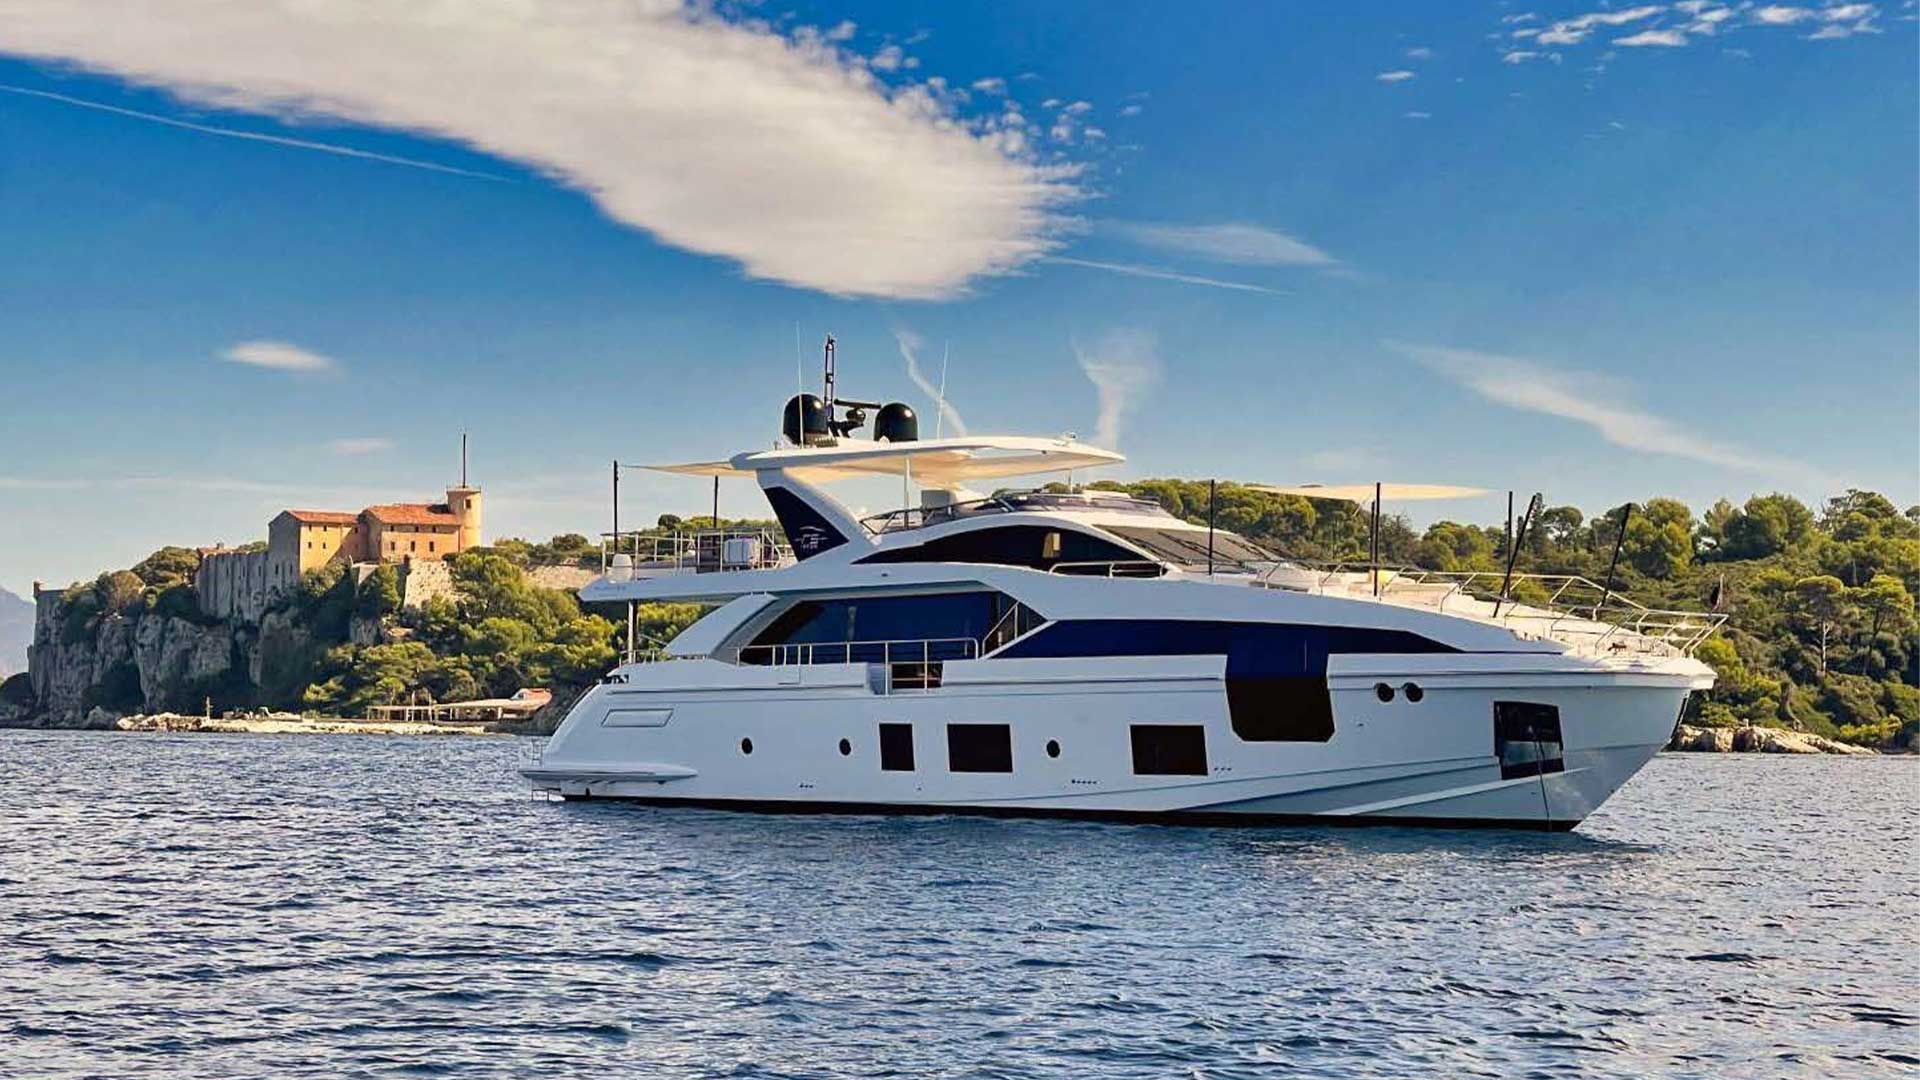 27m Azimut Grande motor yacht Lulwa sold